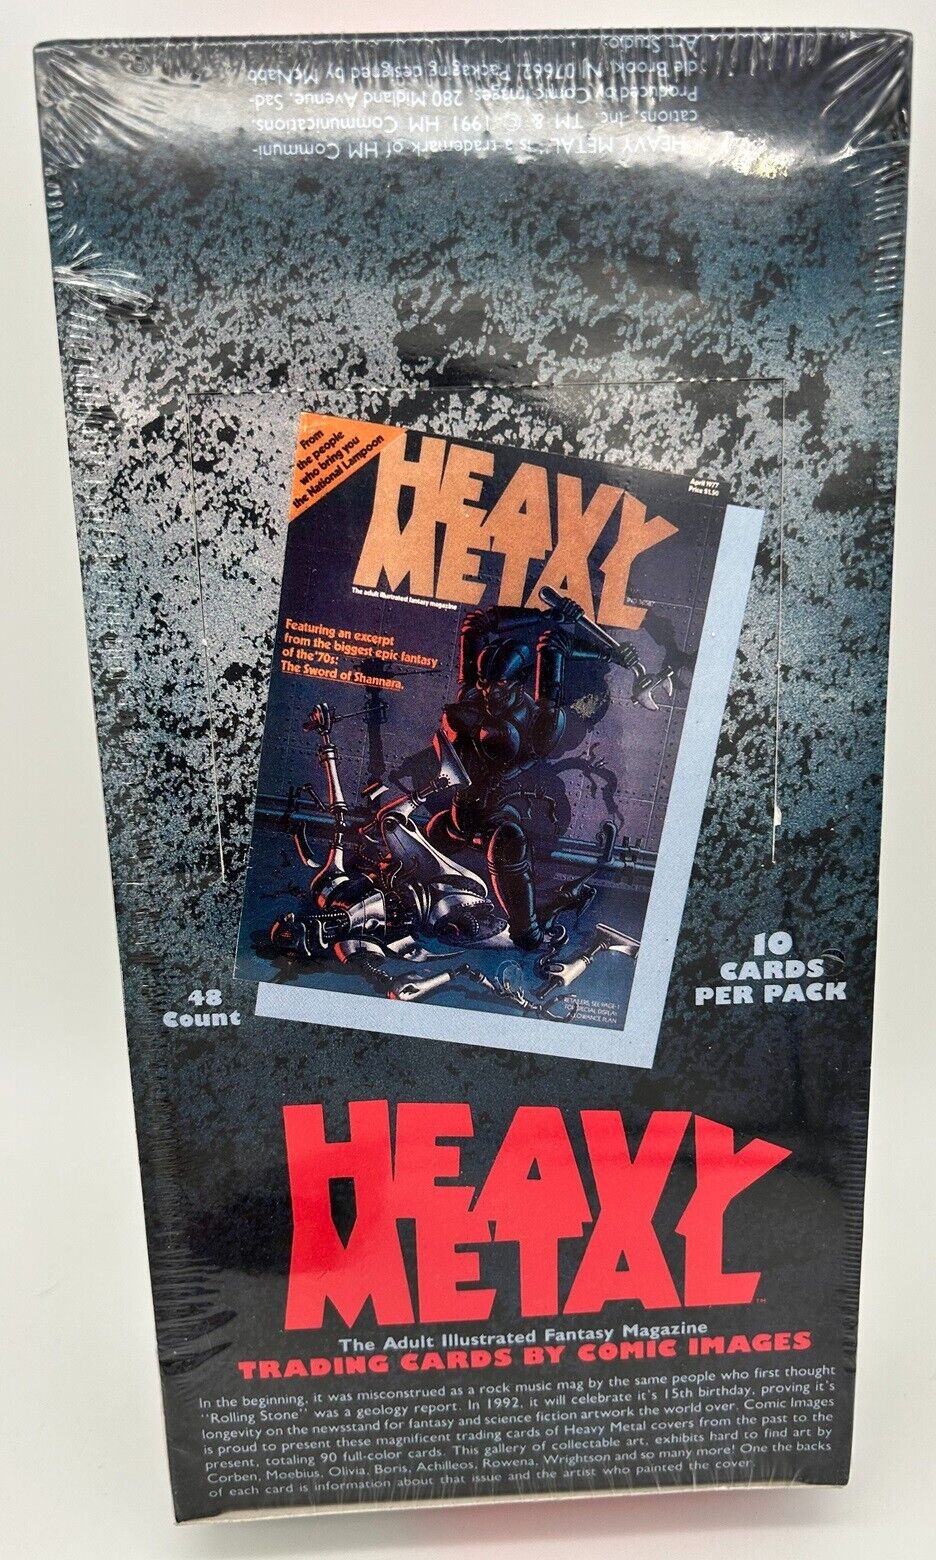 Heavy Metal Trading Card Box - Fantasy Magazine Art - Unopened Comic Images